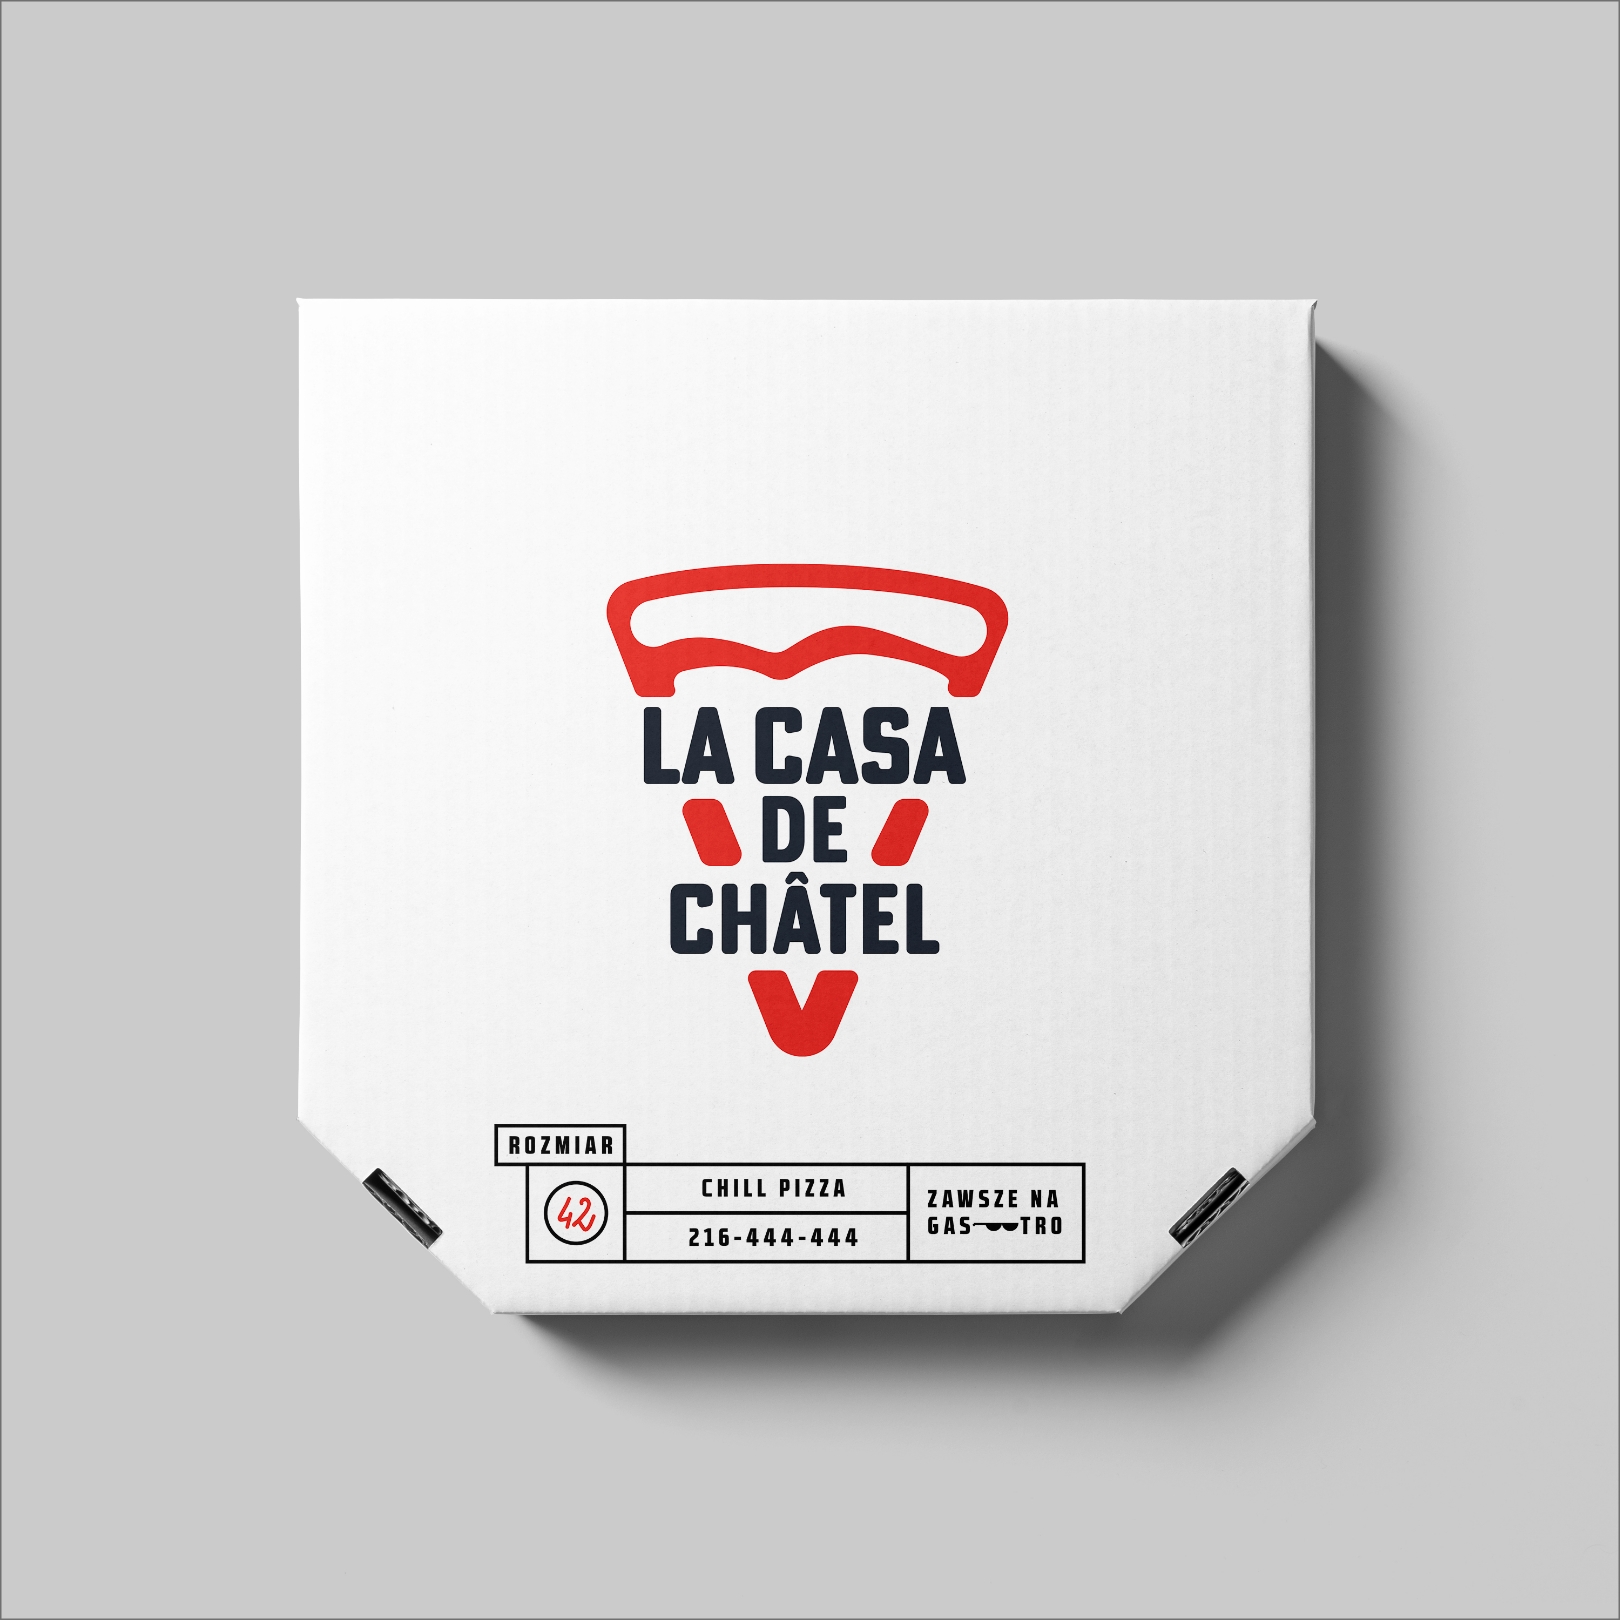 Designing a logo for LA CASA DE CHATEL